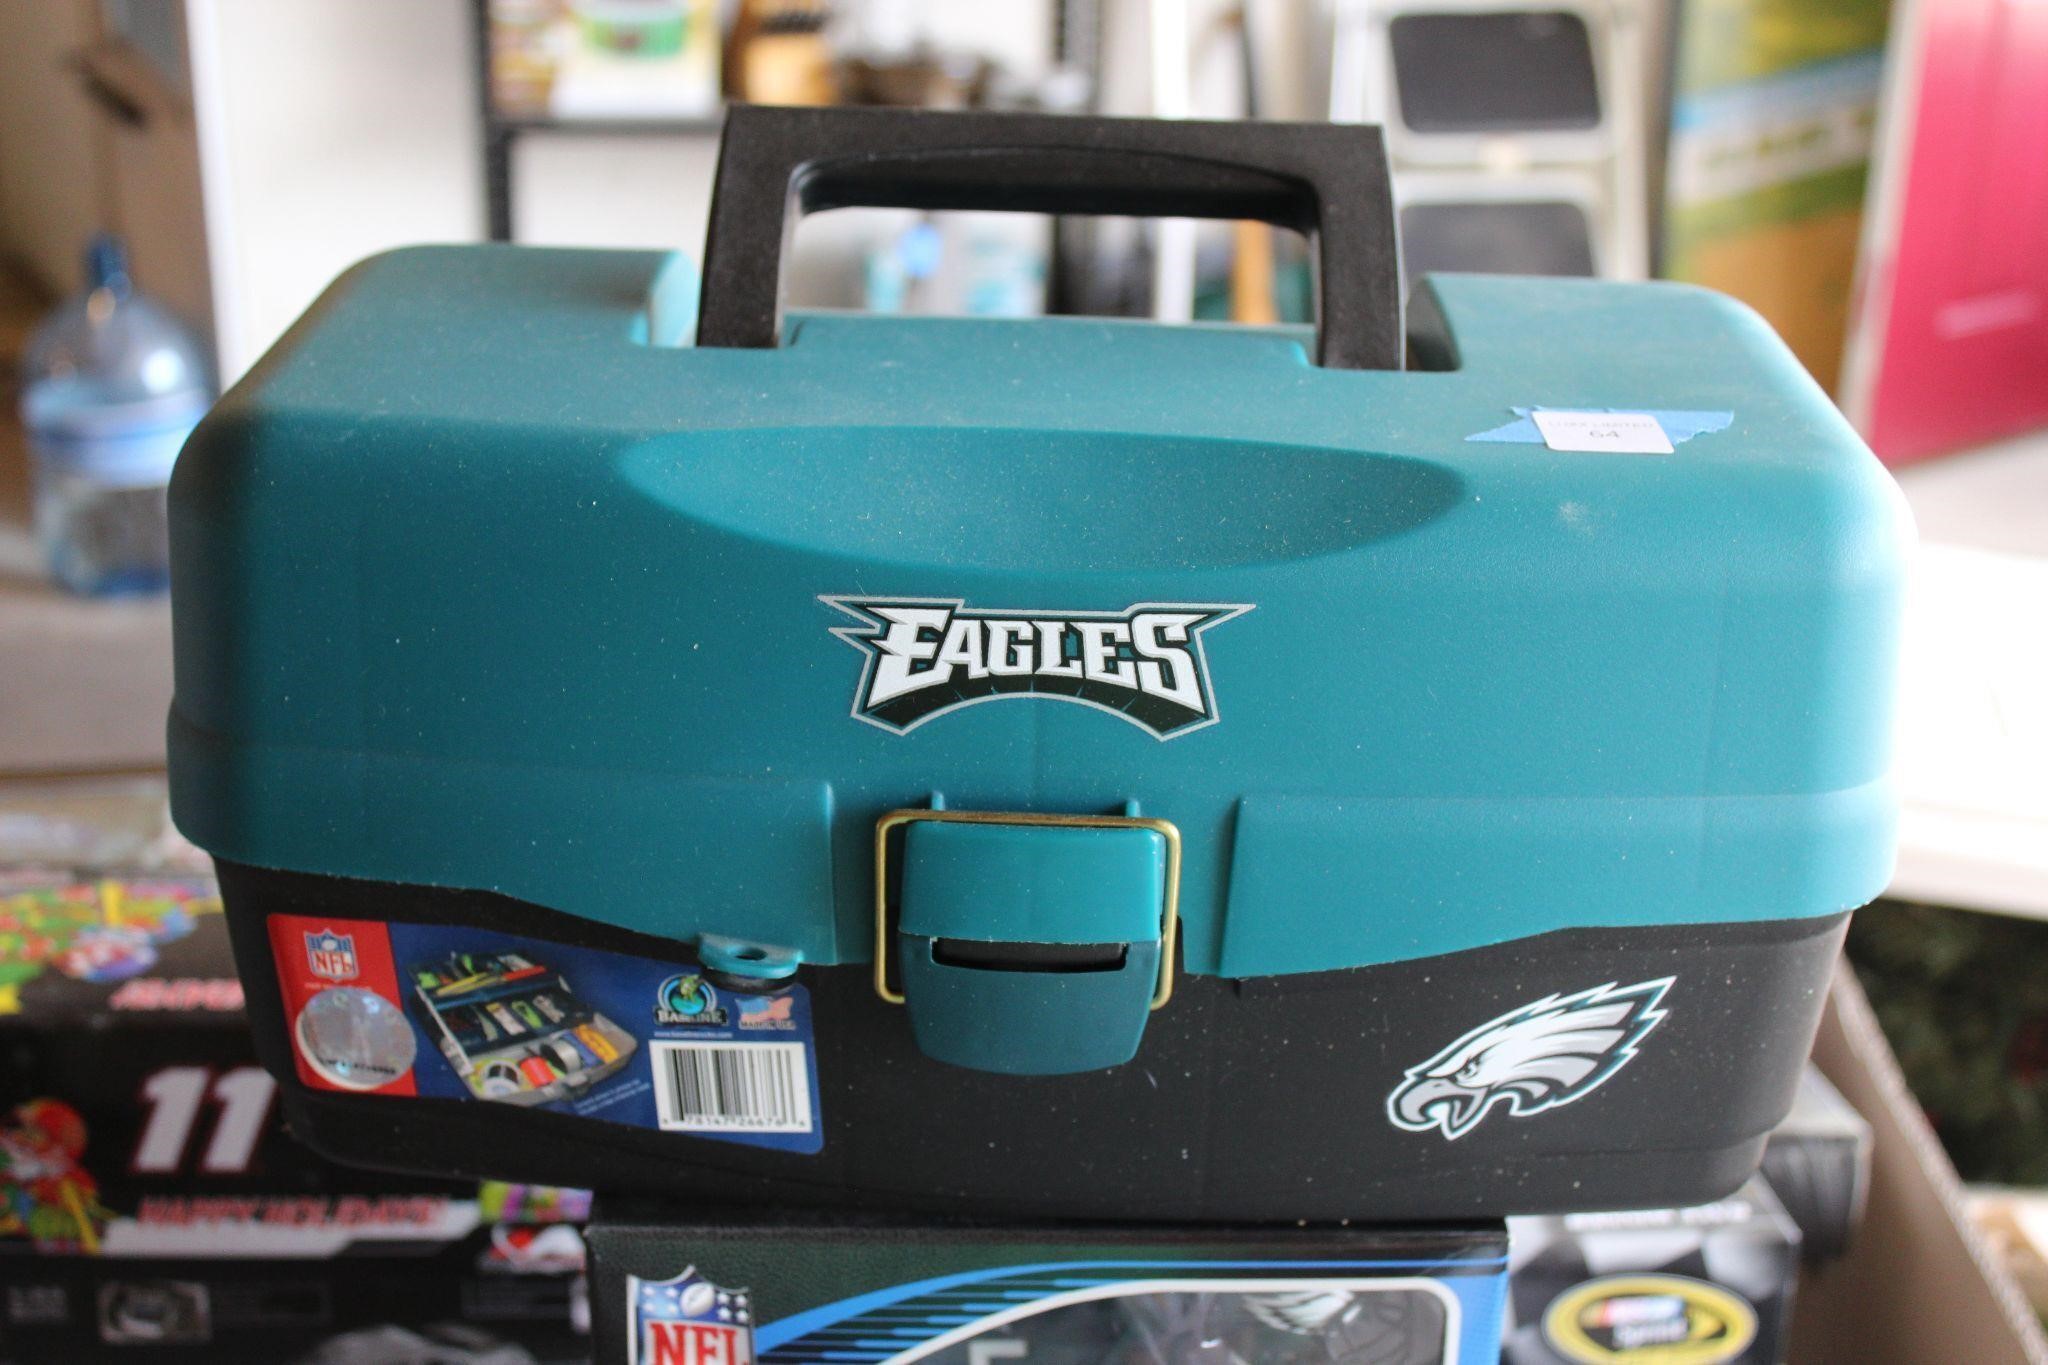 NFL Eagles toolbox (empty inside)